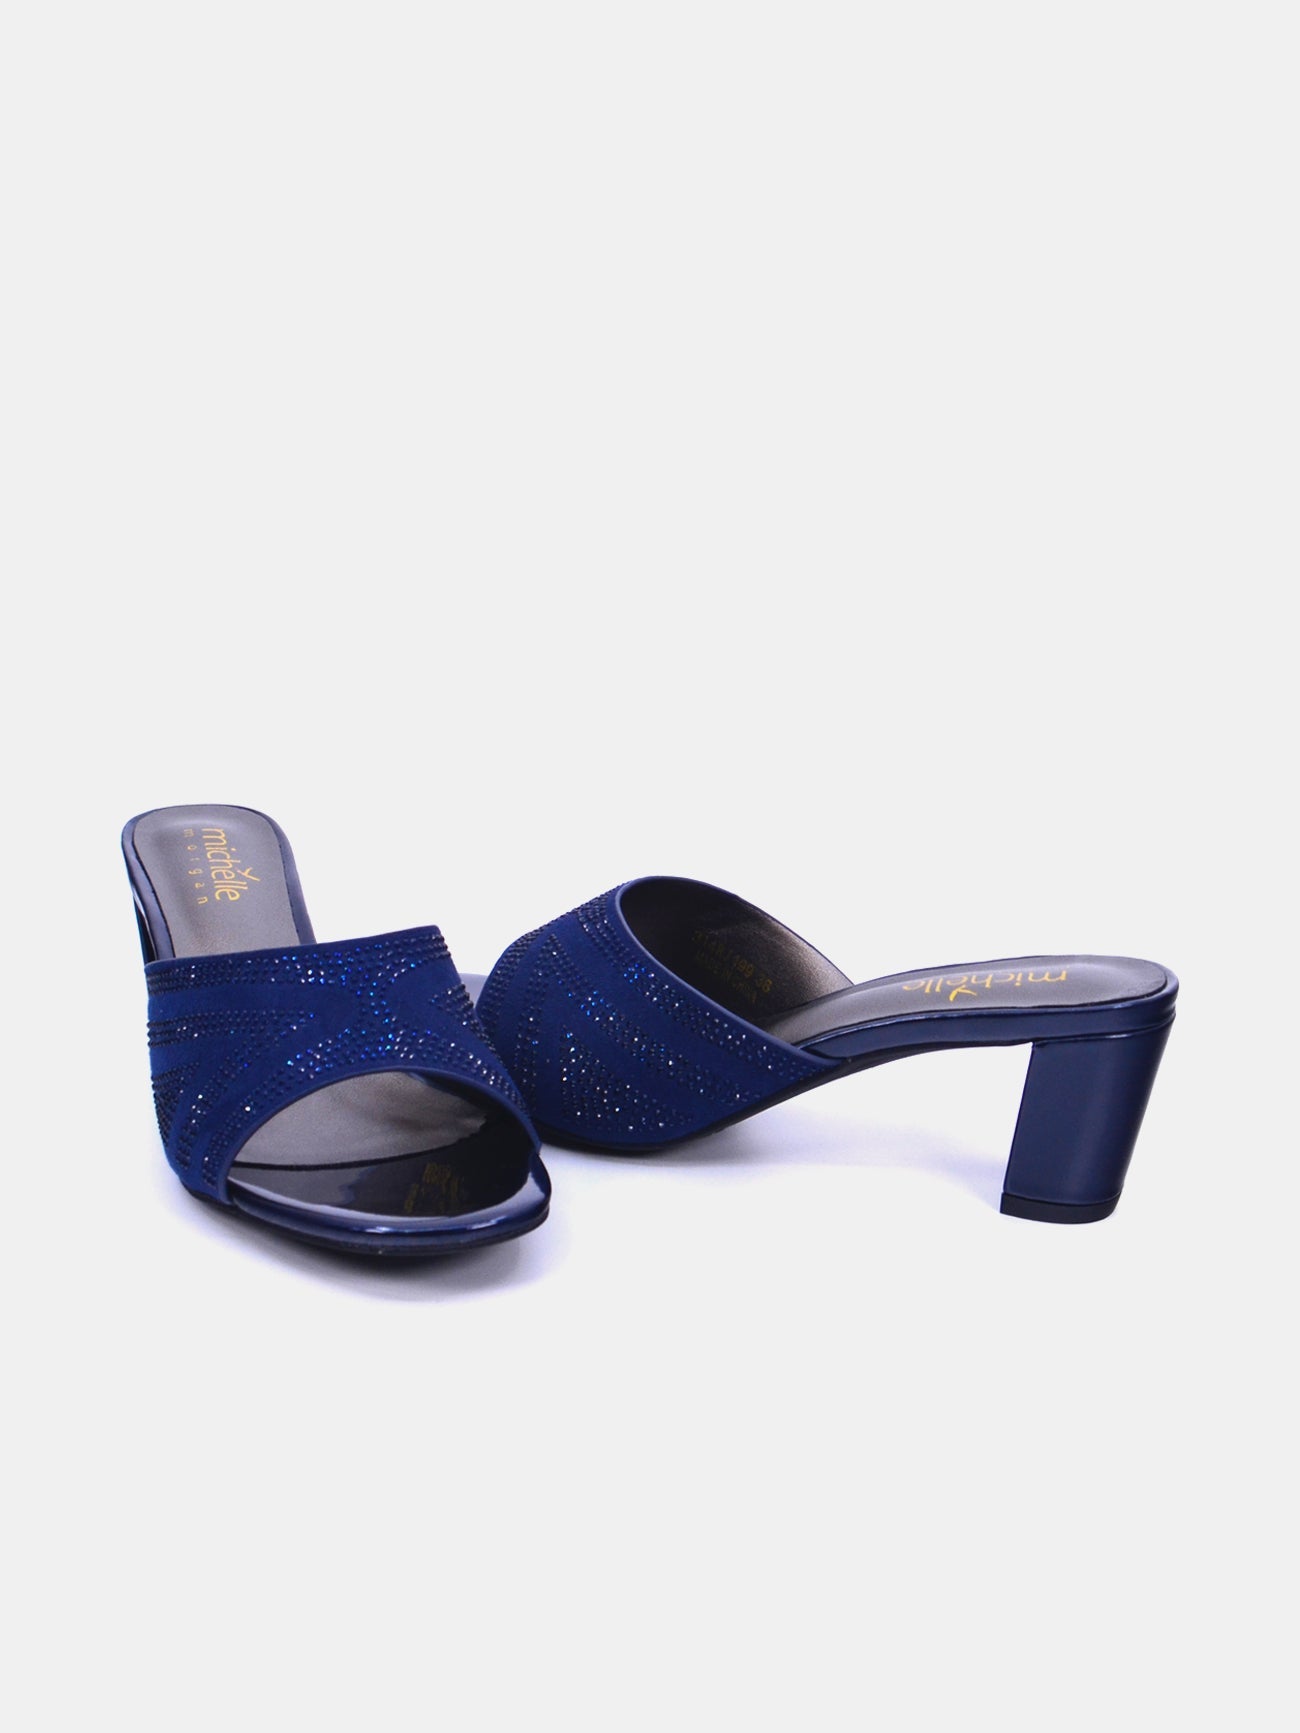 Michelle Morgan 314RJ199 Women's Heeled Sandals #color_Navy